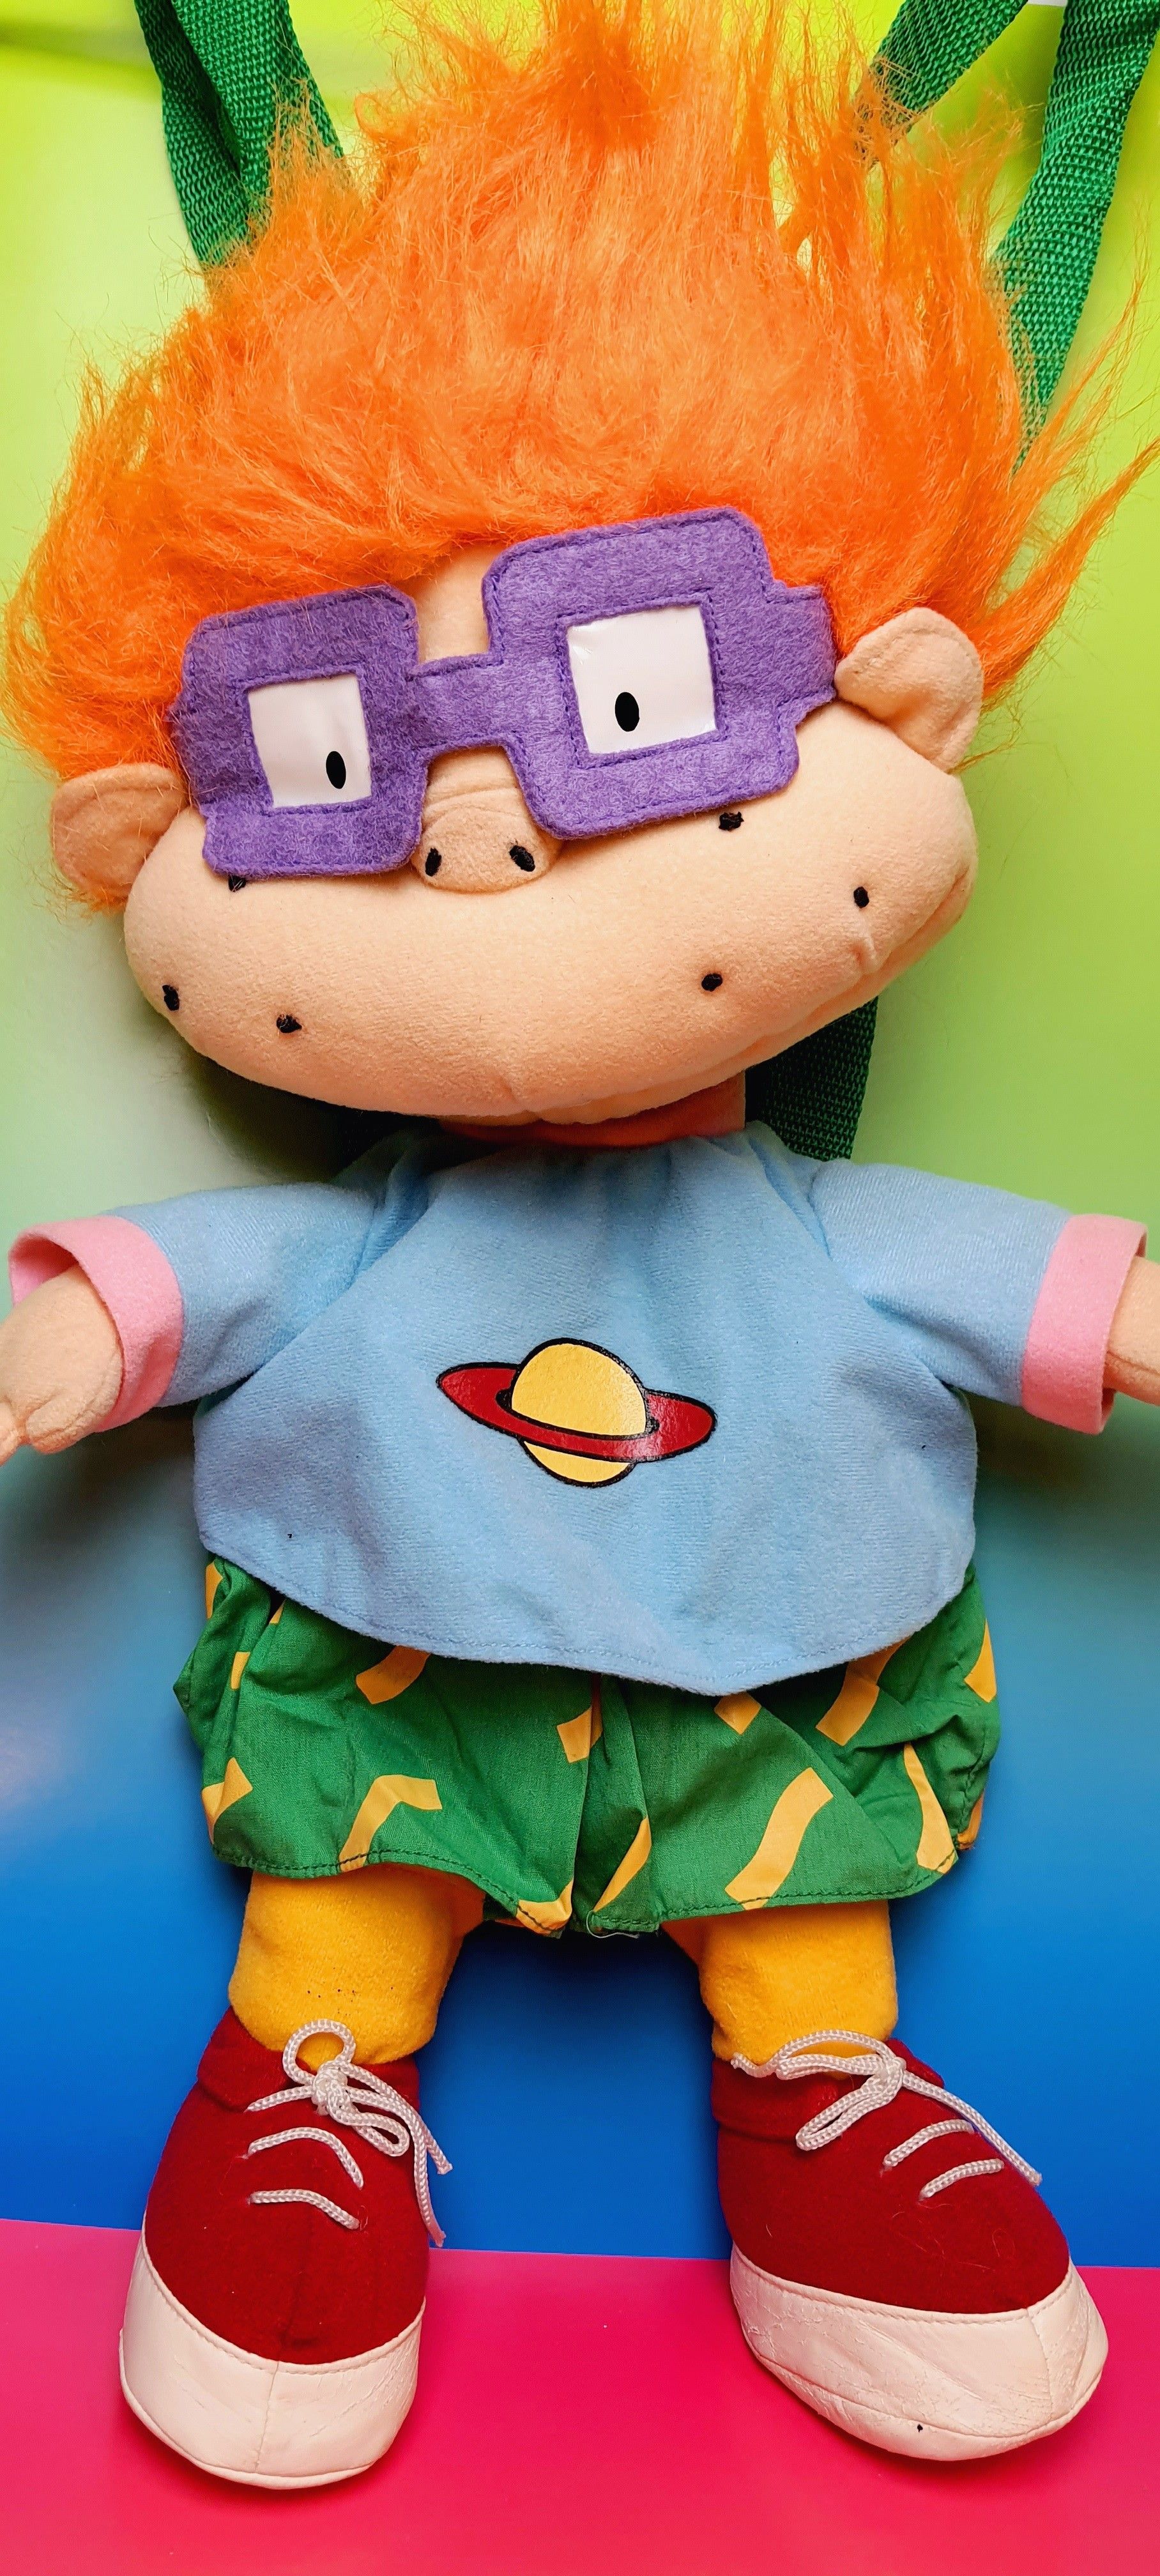 Nickelodeon Rugrats Chuckie 18 Inch Backpack Plush